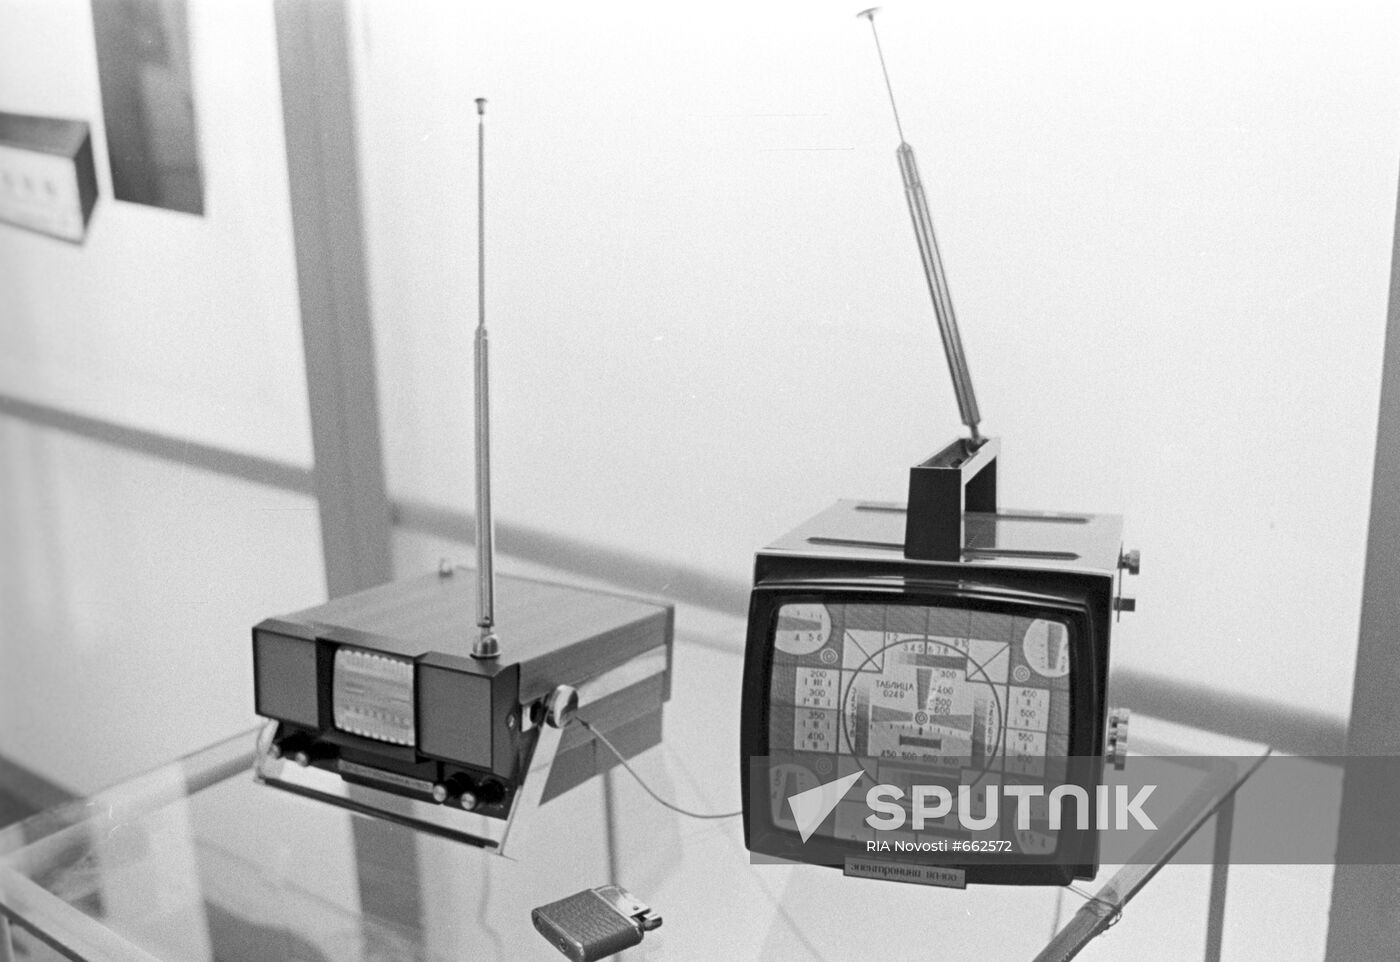 Elektronika-50 and Elektronika VL-100 TV sets